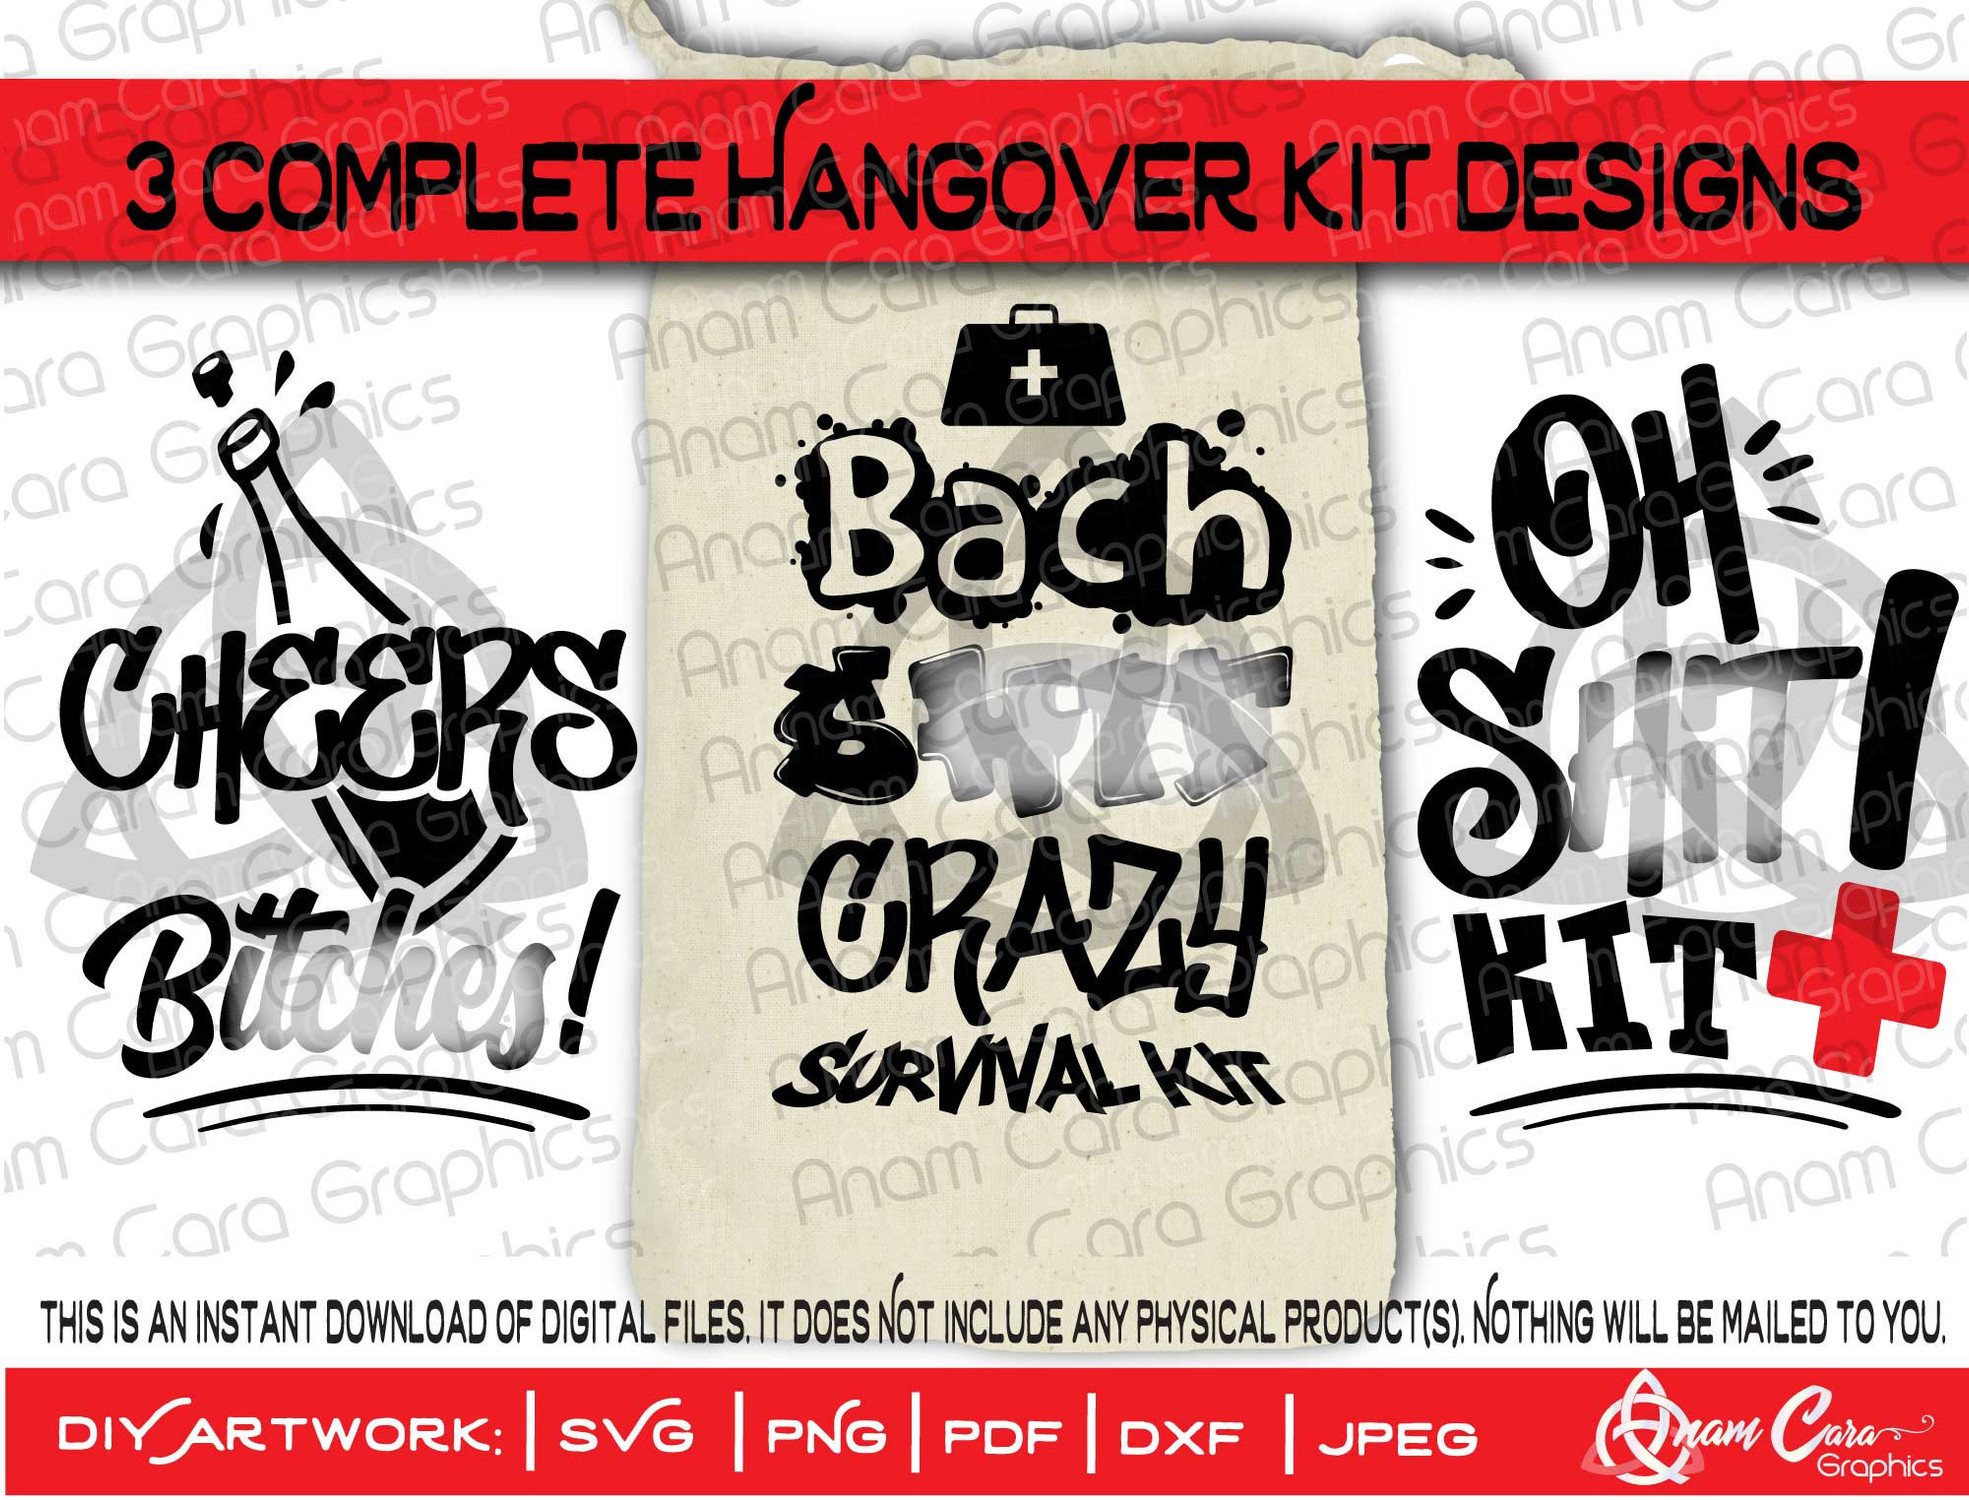 Bundle of 3 Hangover Kit Designs